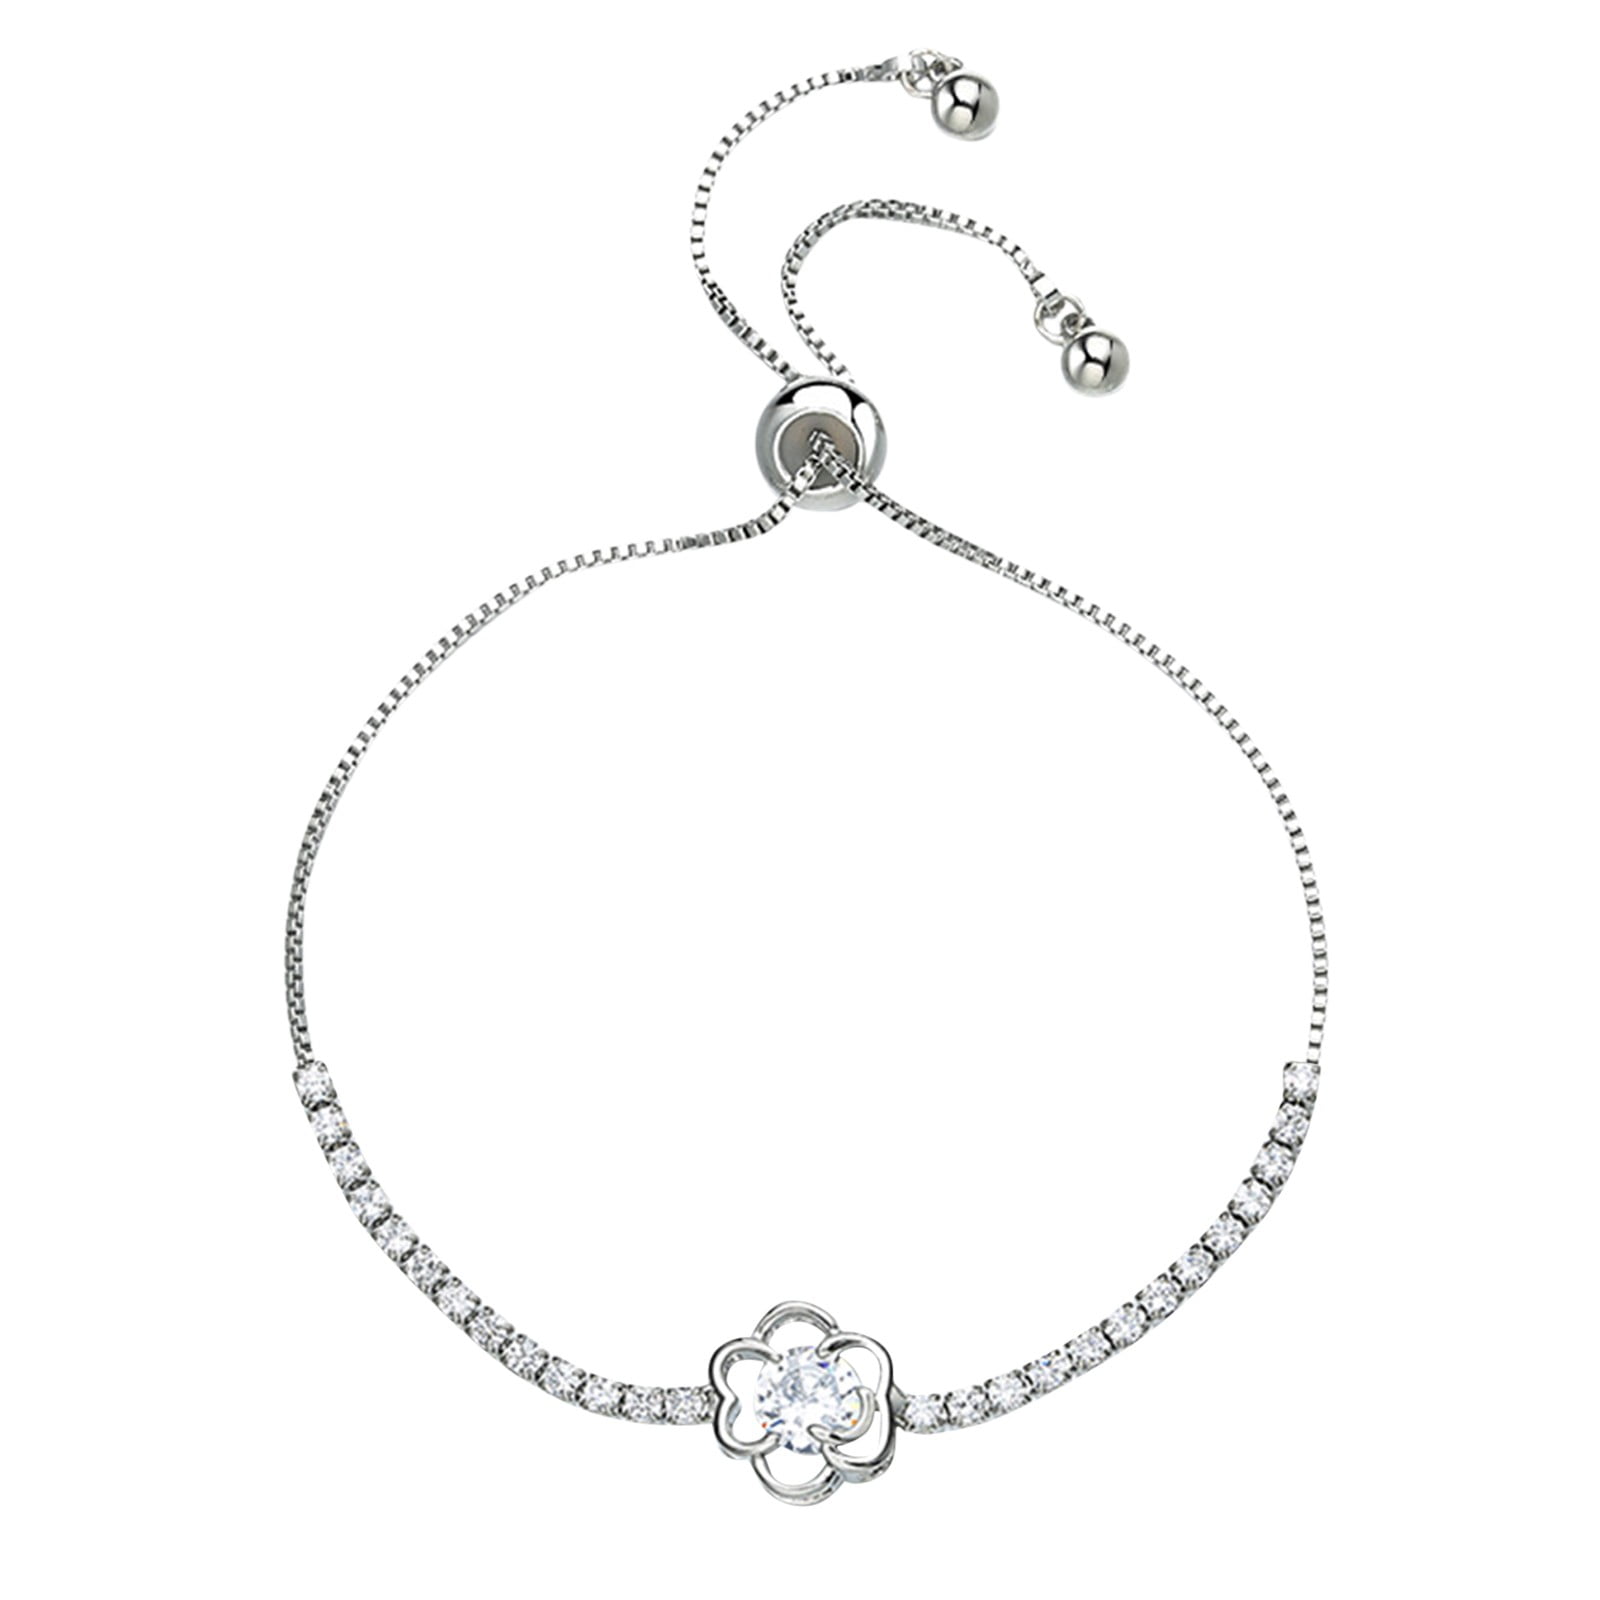 XIAQUJ Design Delicate Rose Flower Zircon Pendant Necklace Rose